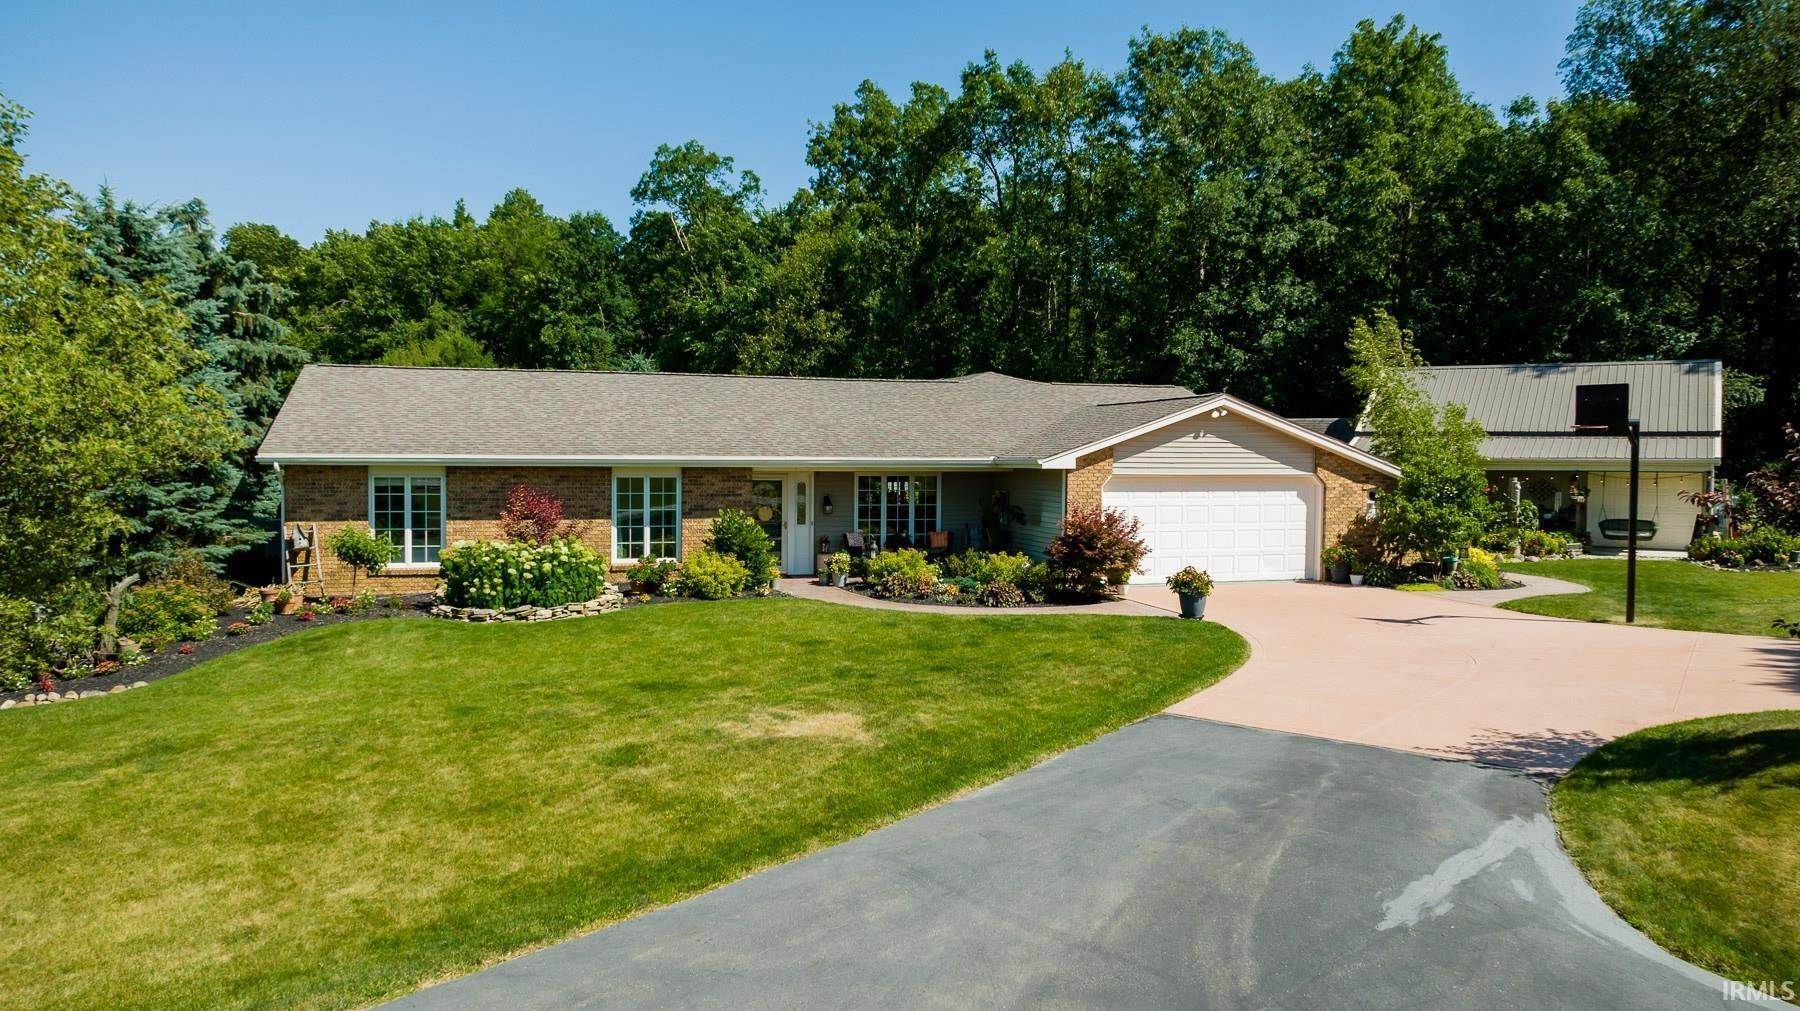 Single Family Homes for Sale at 7630 E State Road 205 Churubusco, Indiana 46723 United States